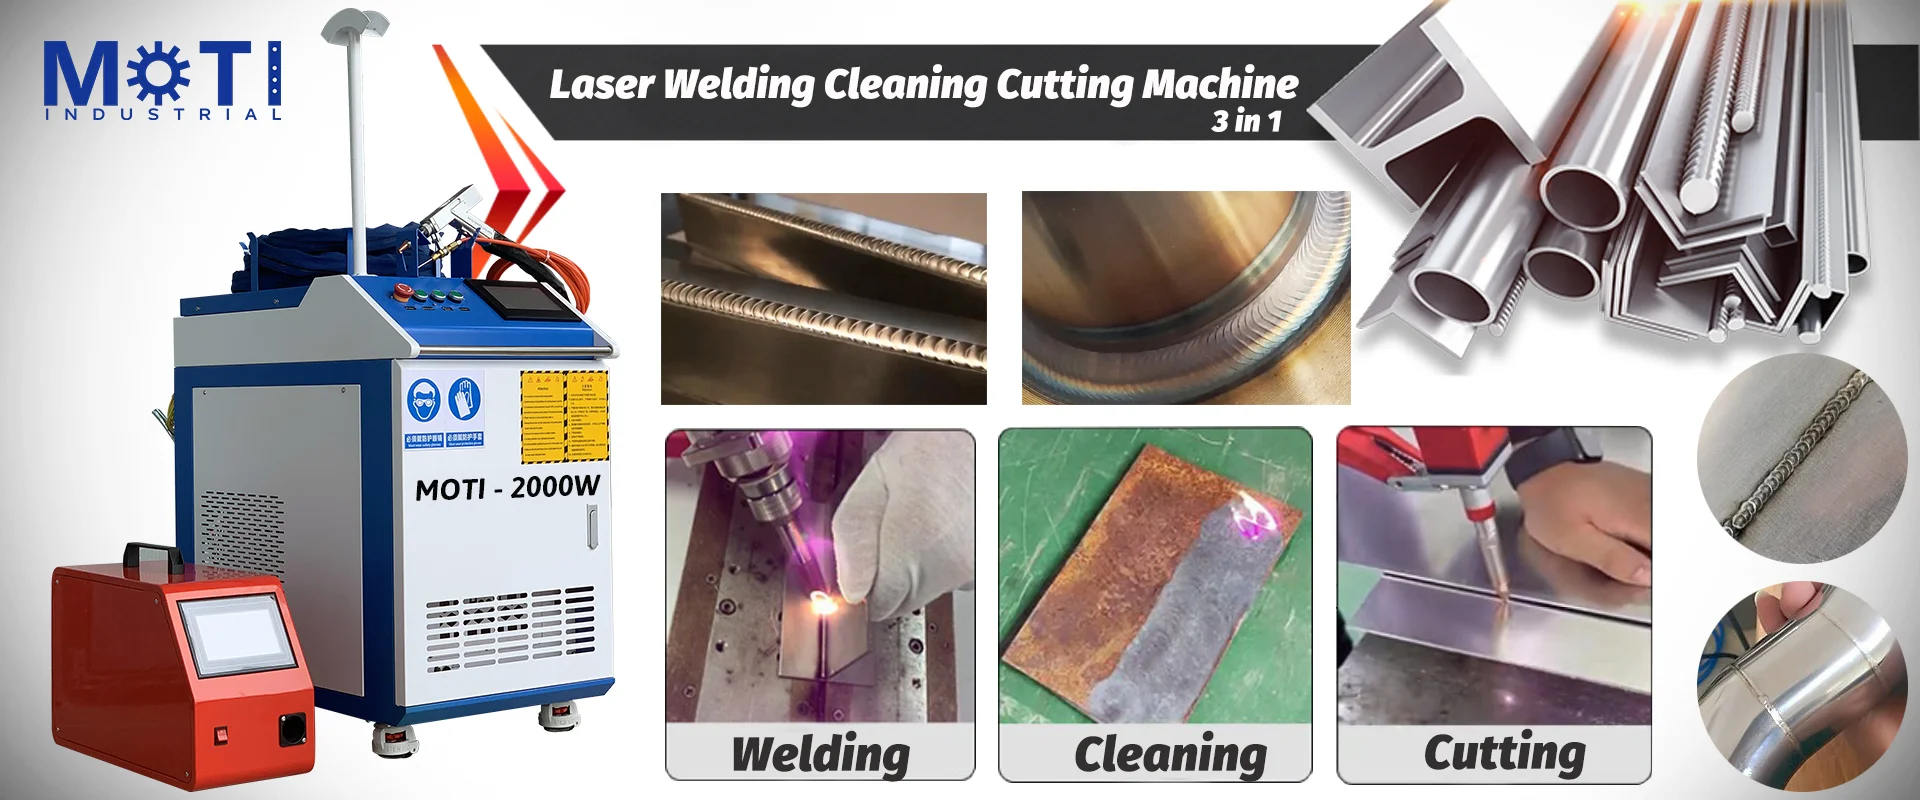 Laser Welding Cleaning Cutting Machine 3 in 1 